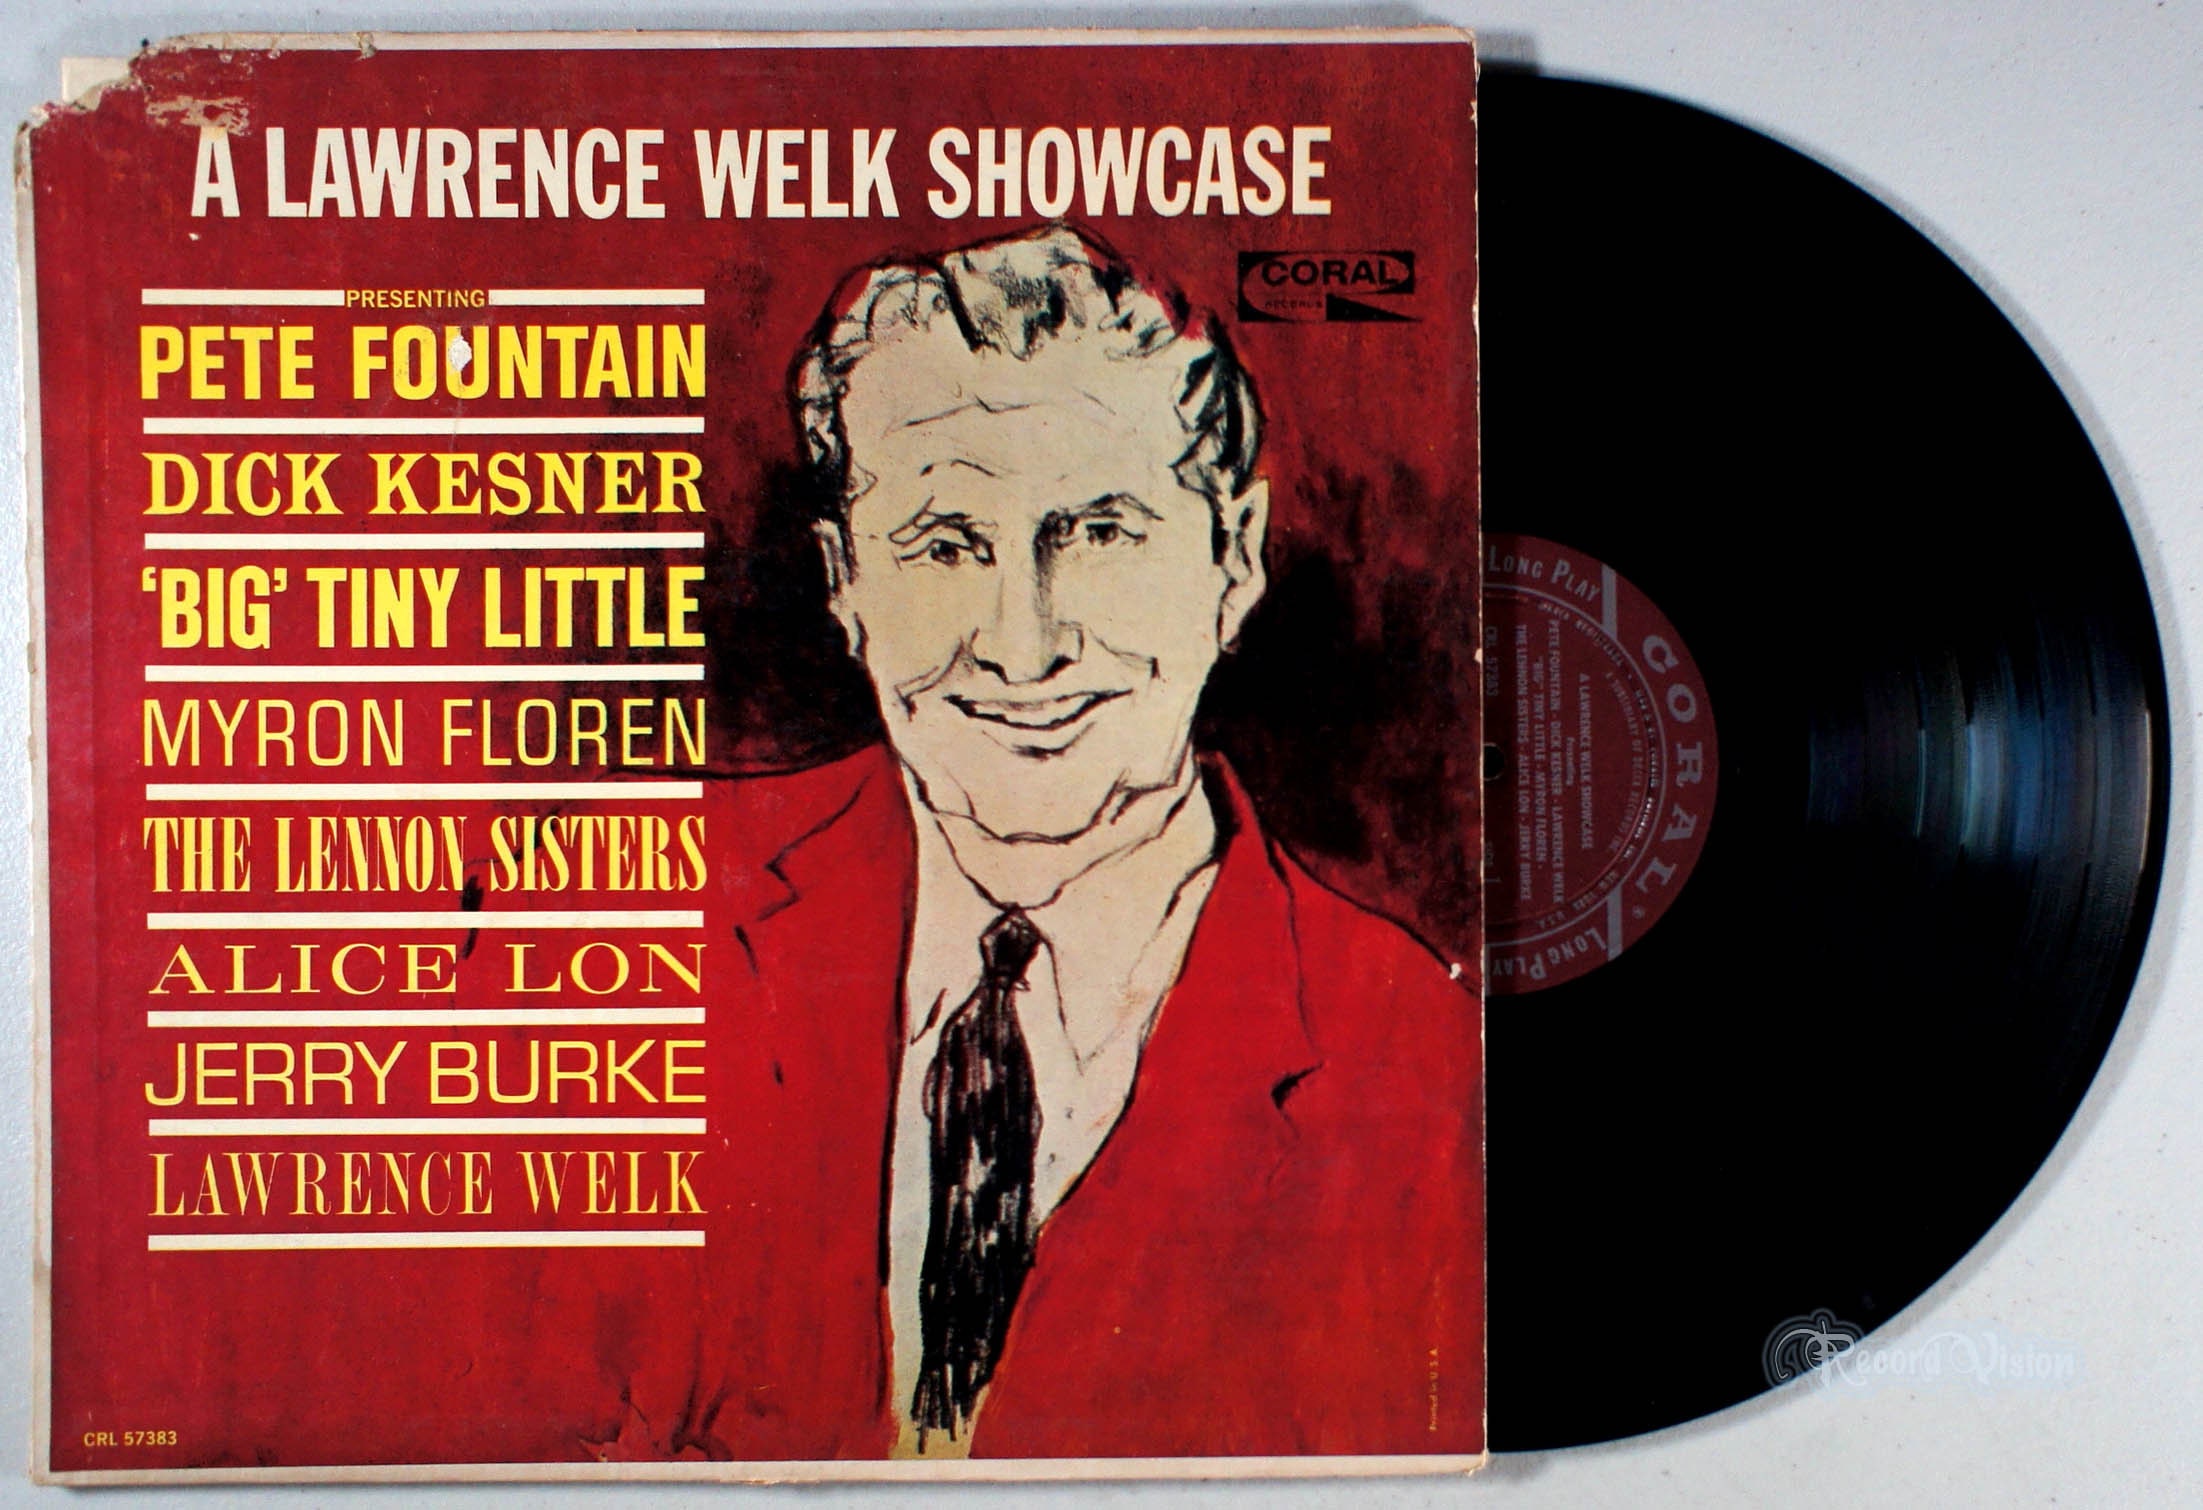 Lawrence Welk A Showcase 1959 Vinyl LP Champange - Etsy Israel